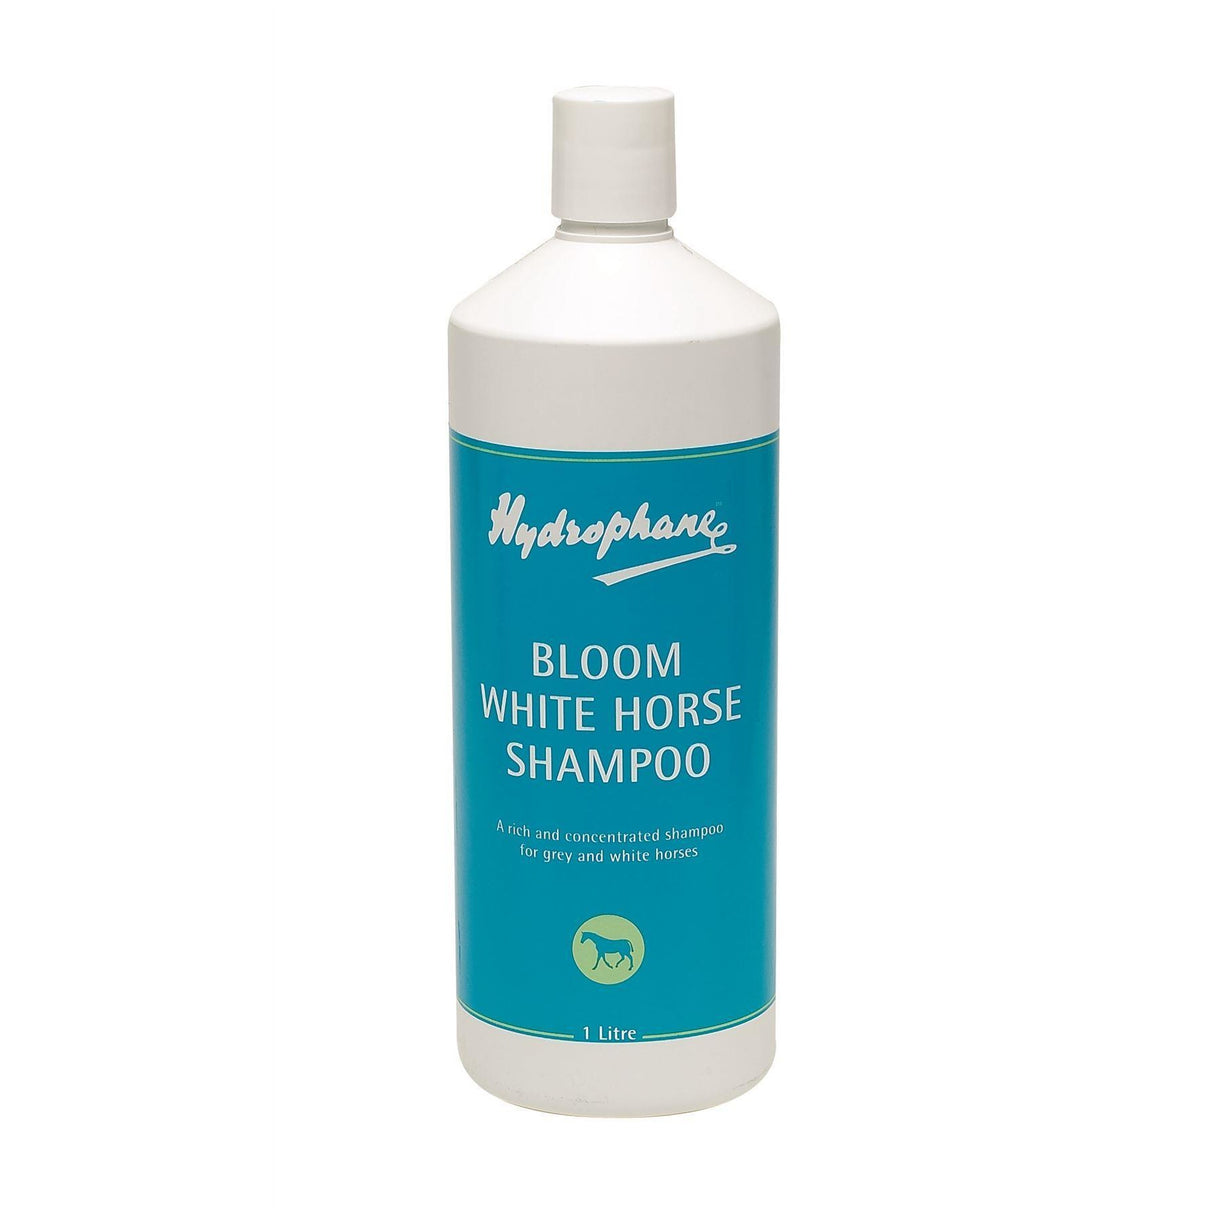 HYDROPHANE Bloom White Horse Shampoo 1693